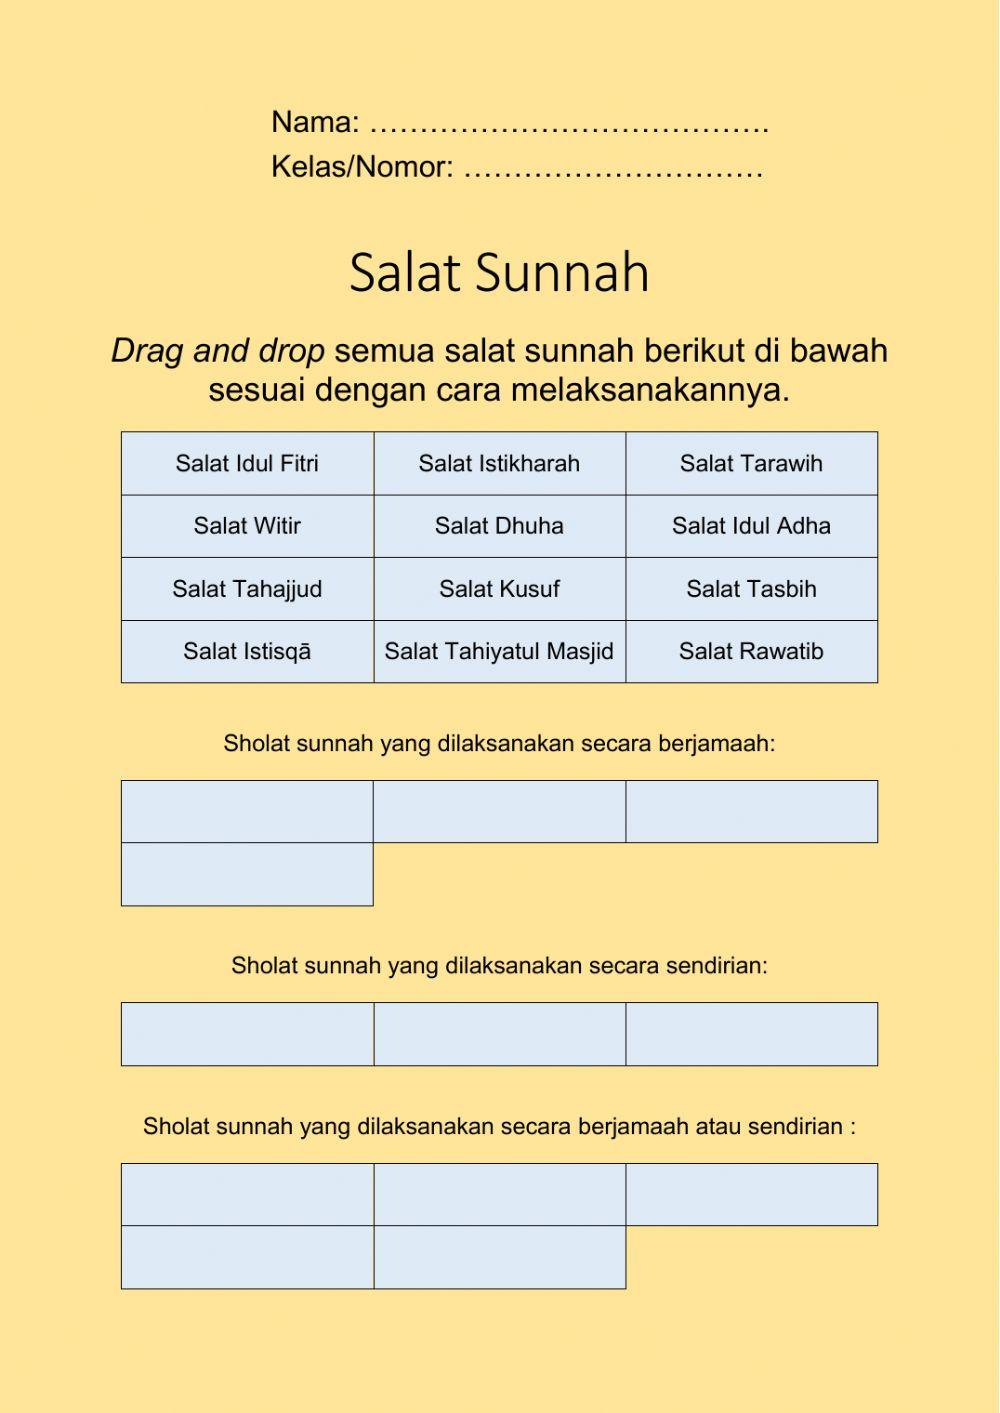 Salat Sunnah